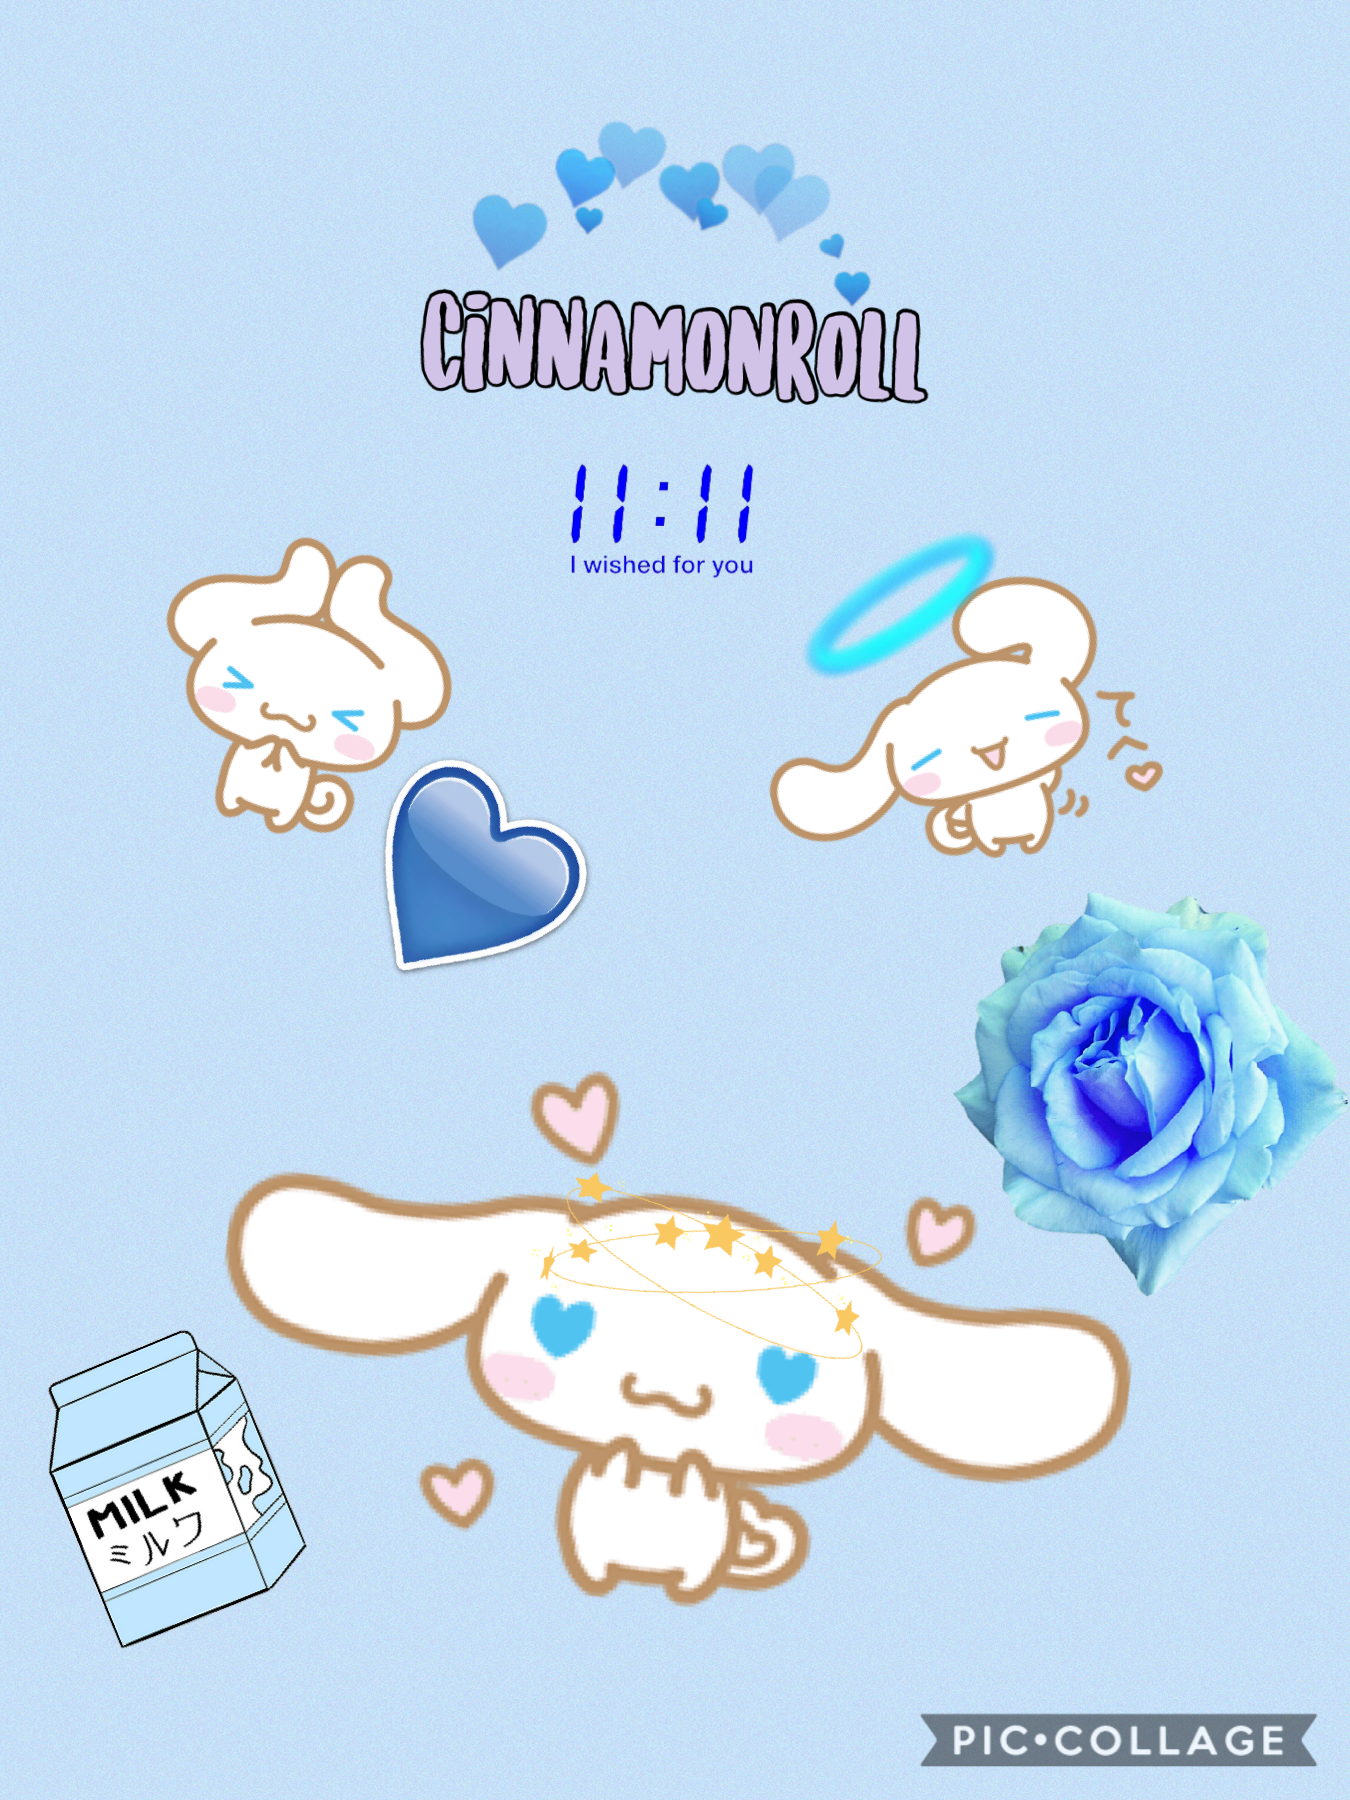 Cinnamonroll is my fav Sanrio character 💙